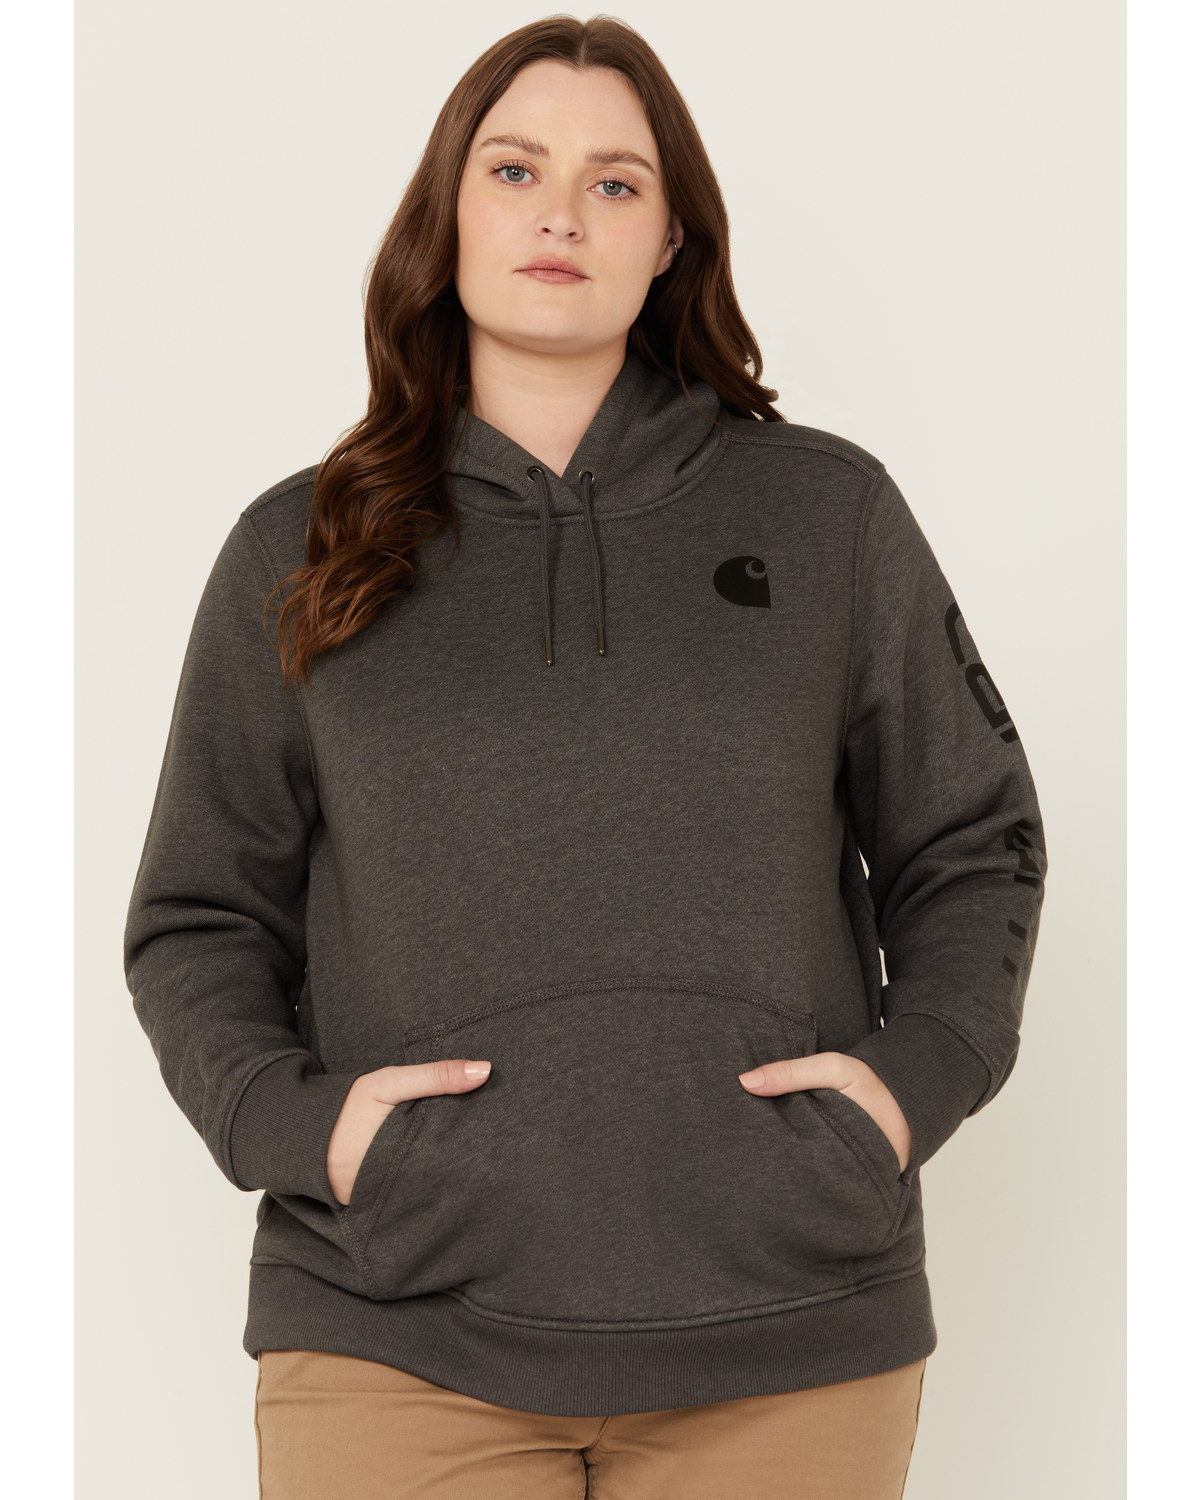 Carhartt Women's Relaxed Fit Midweight Logo Hooded Work Sweatshirt - Plus